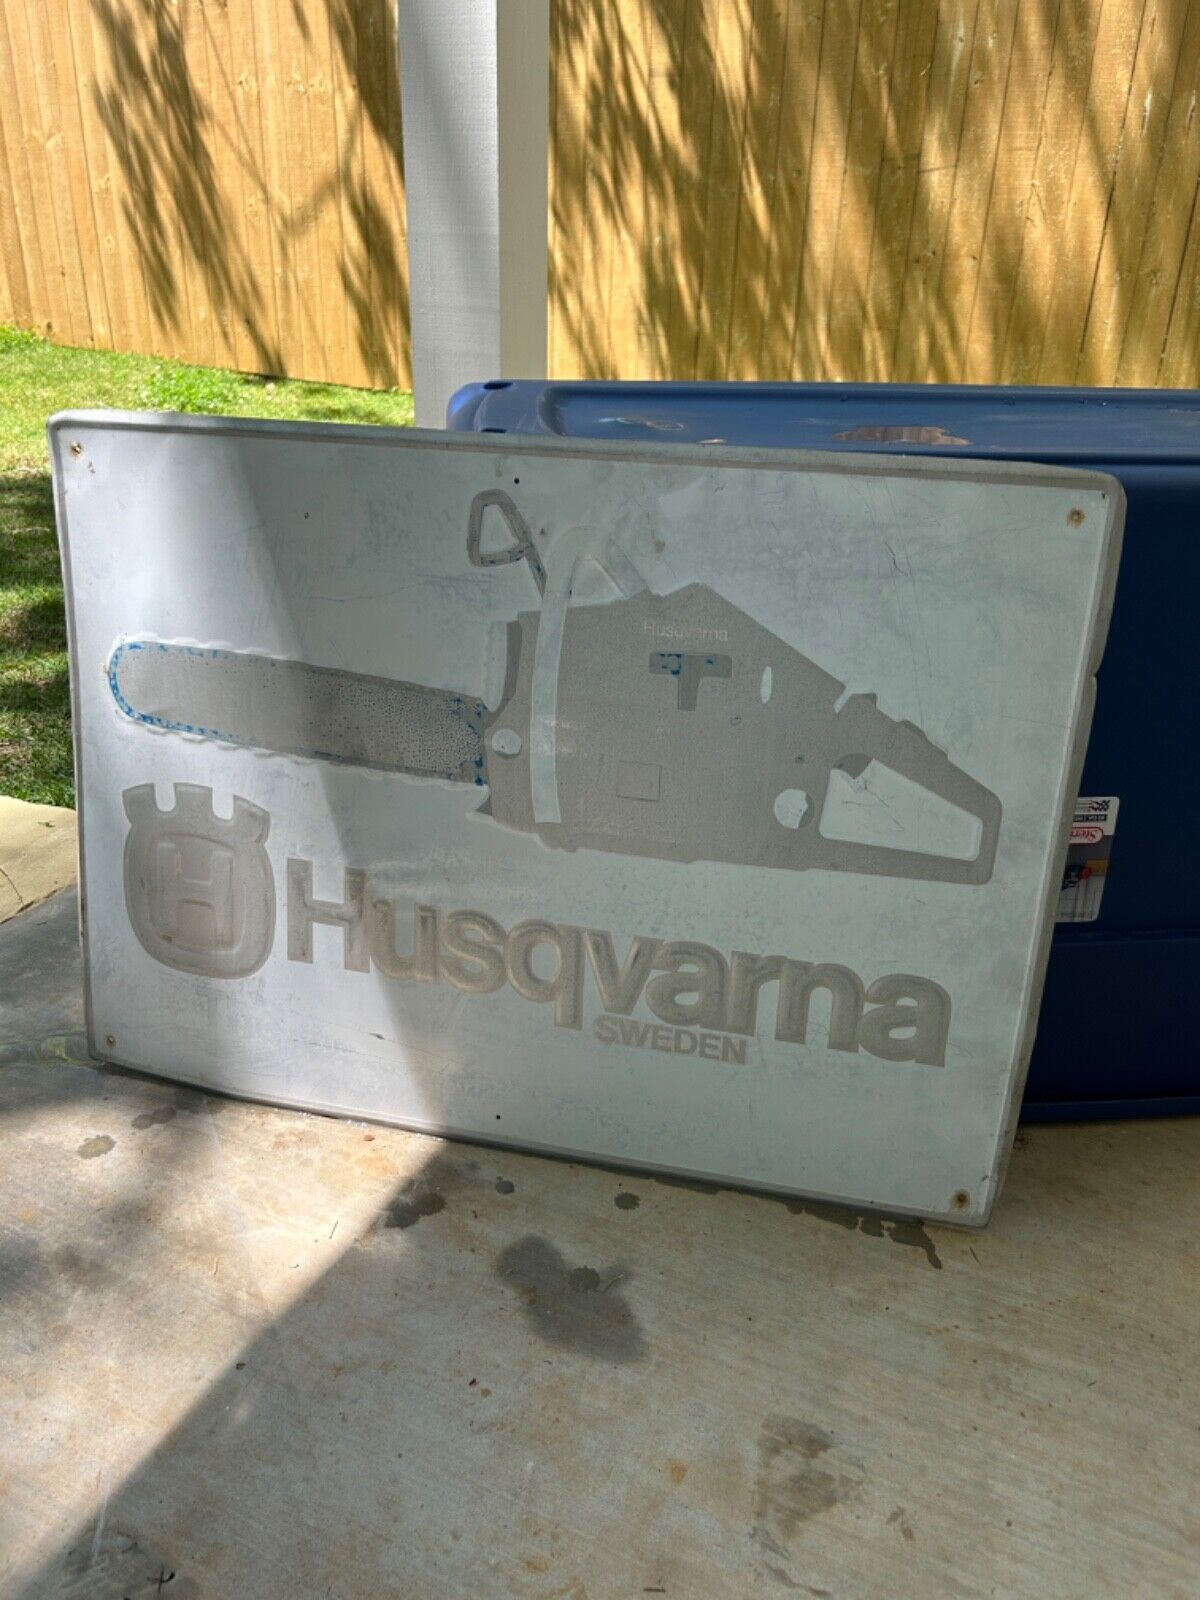 ORIGINAL Vintage EMBOSSED Husqvarna Chainsaws tin tacker sign advertising WORN